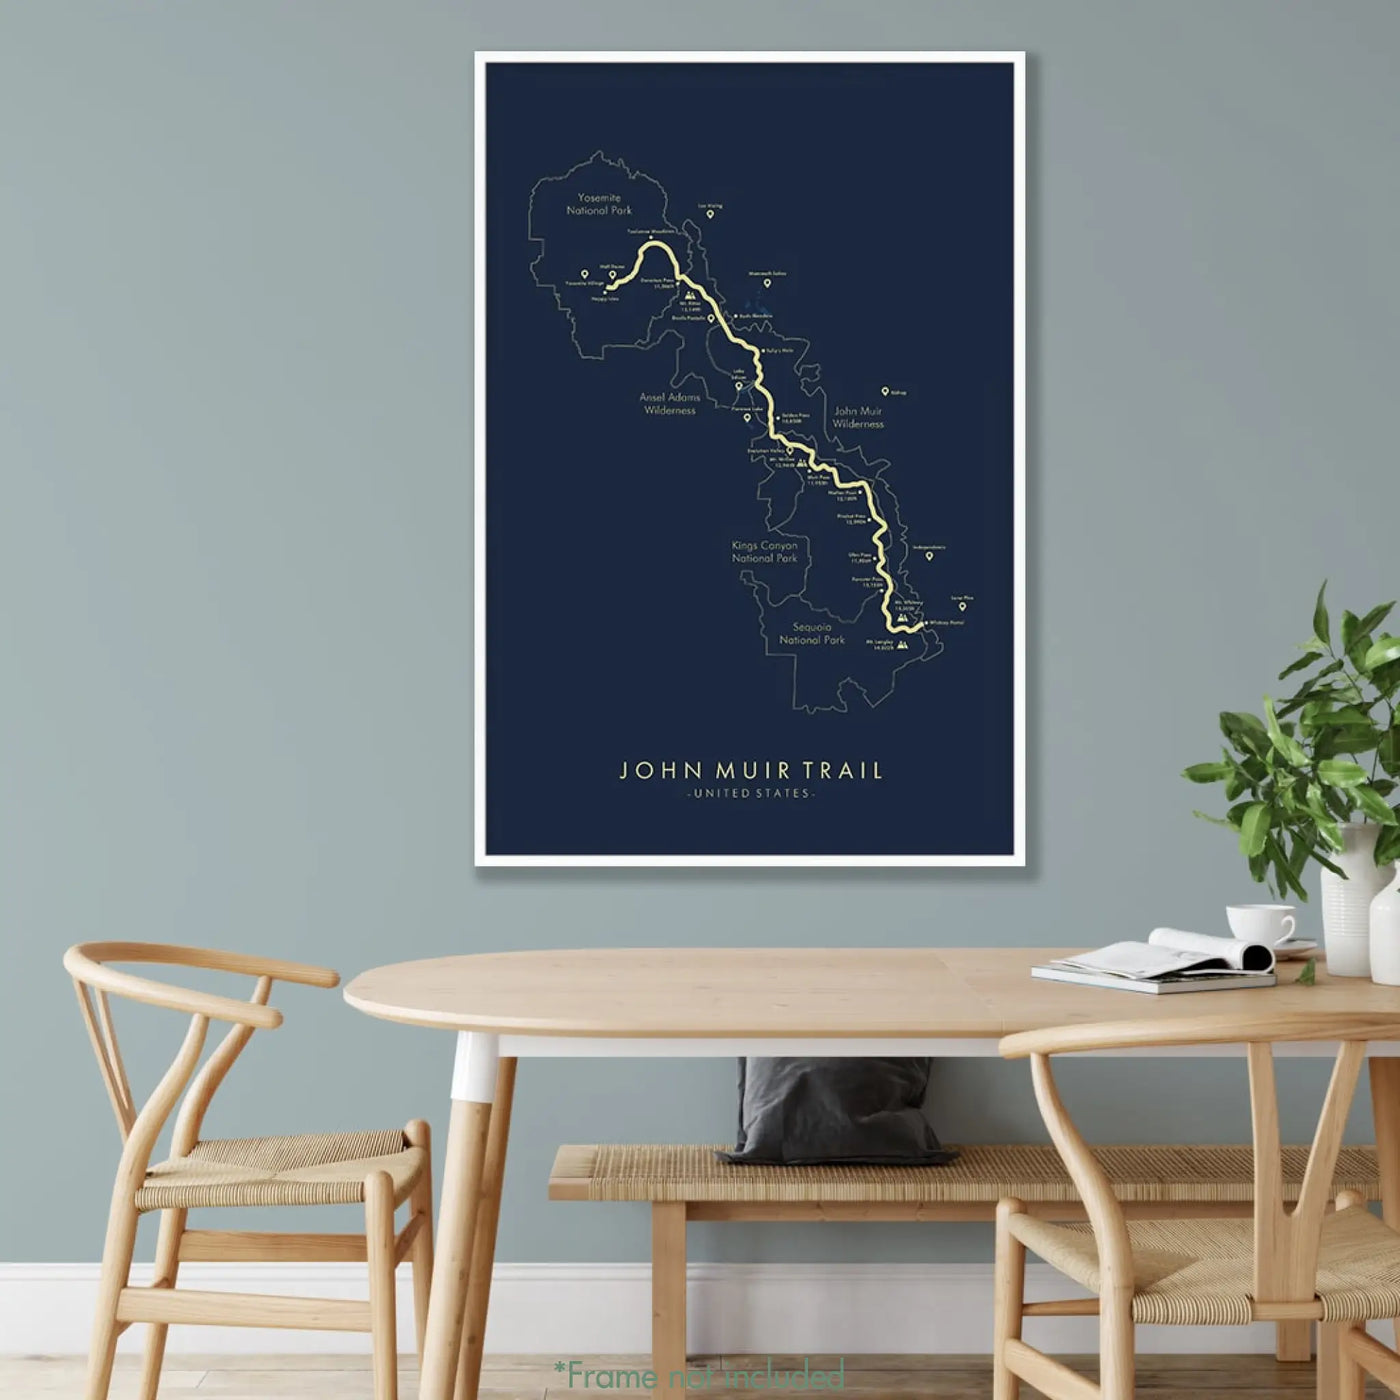 Trail Poster of John Muir Trail - Blue Mockup